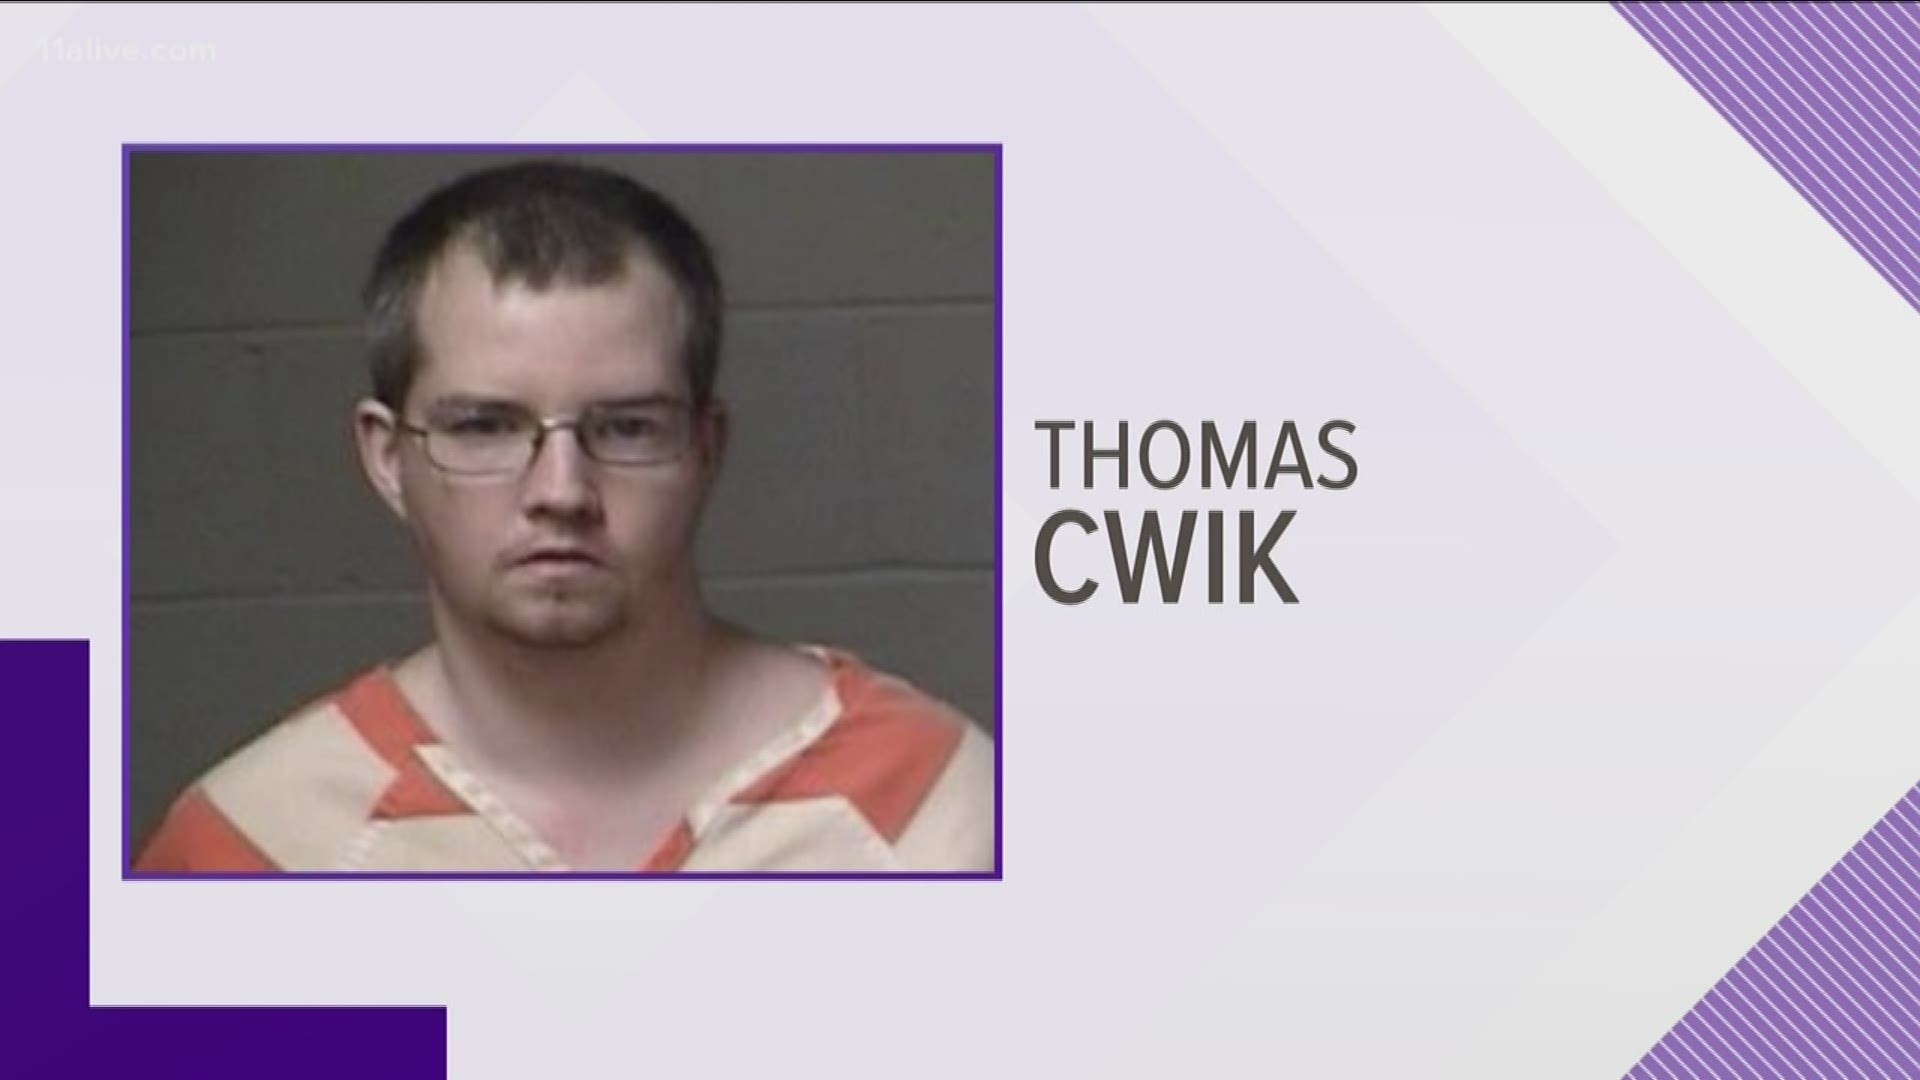 Authorities arrested Thomas Cwik.